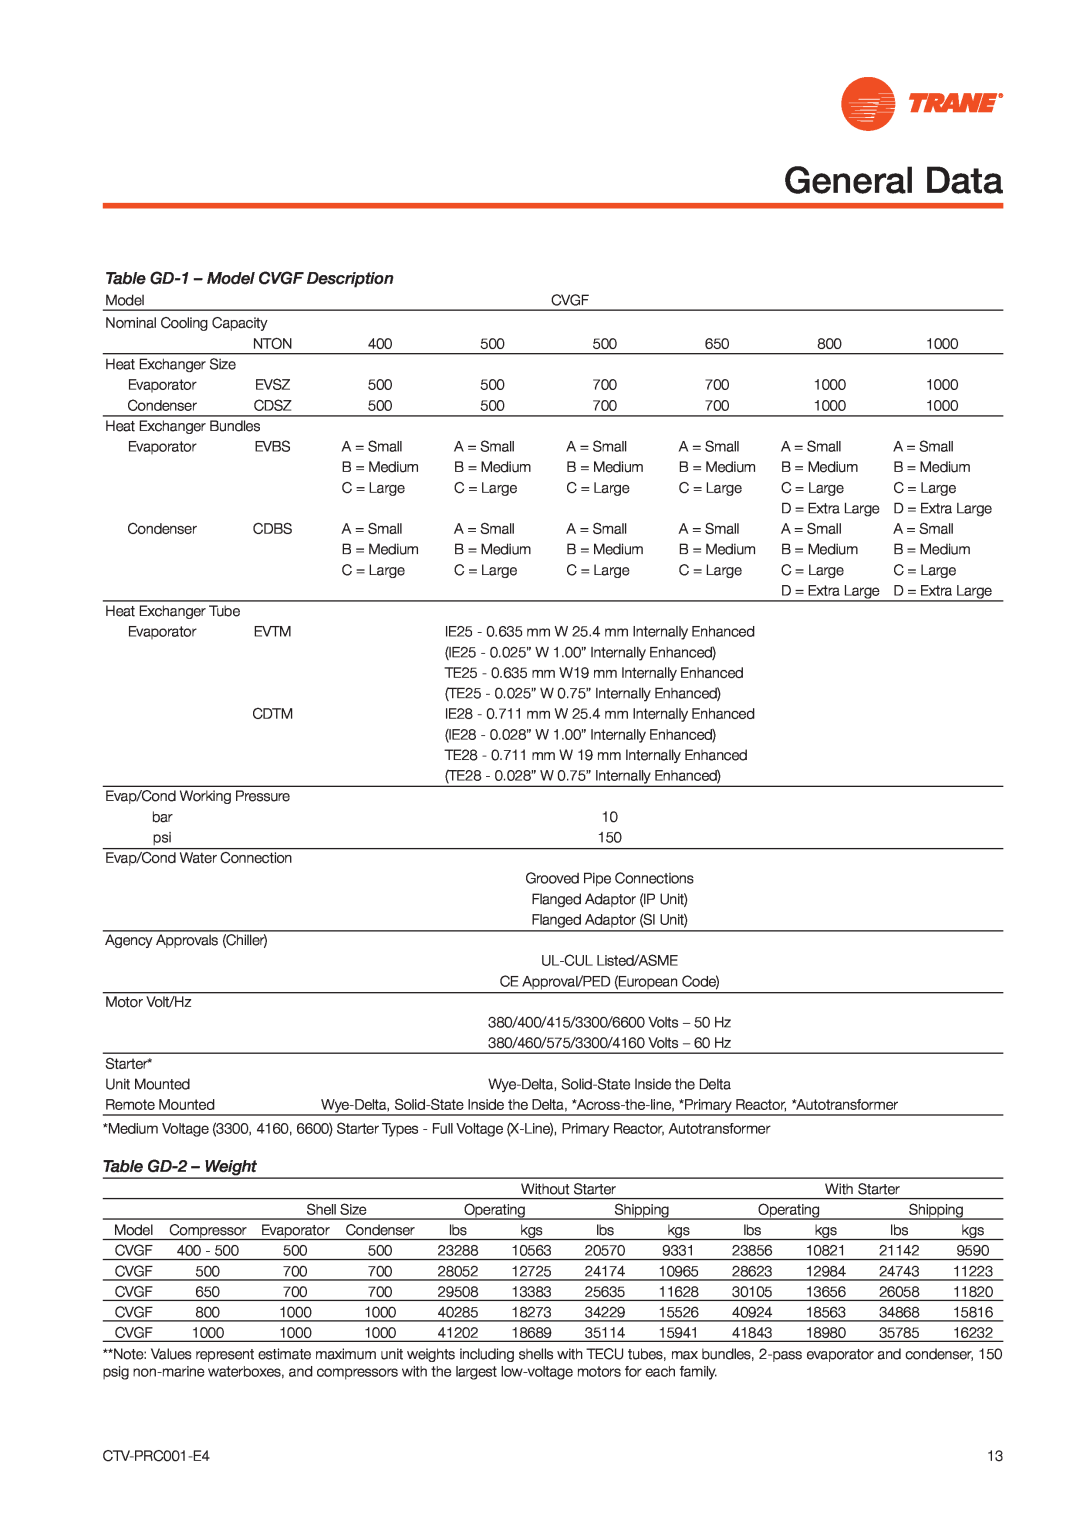 Trane manual General Data, Table GD-1- Model CVGF Description, Table GD-2- Weight 